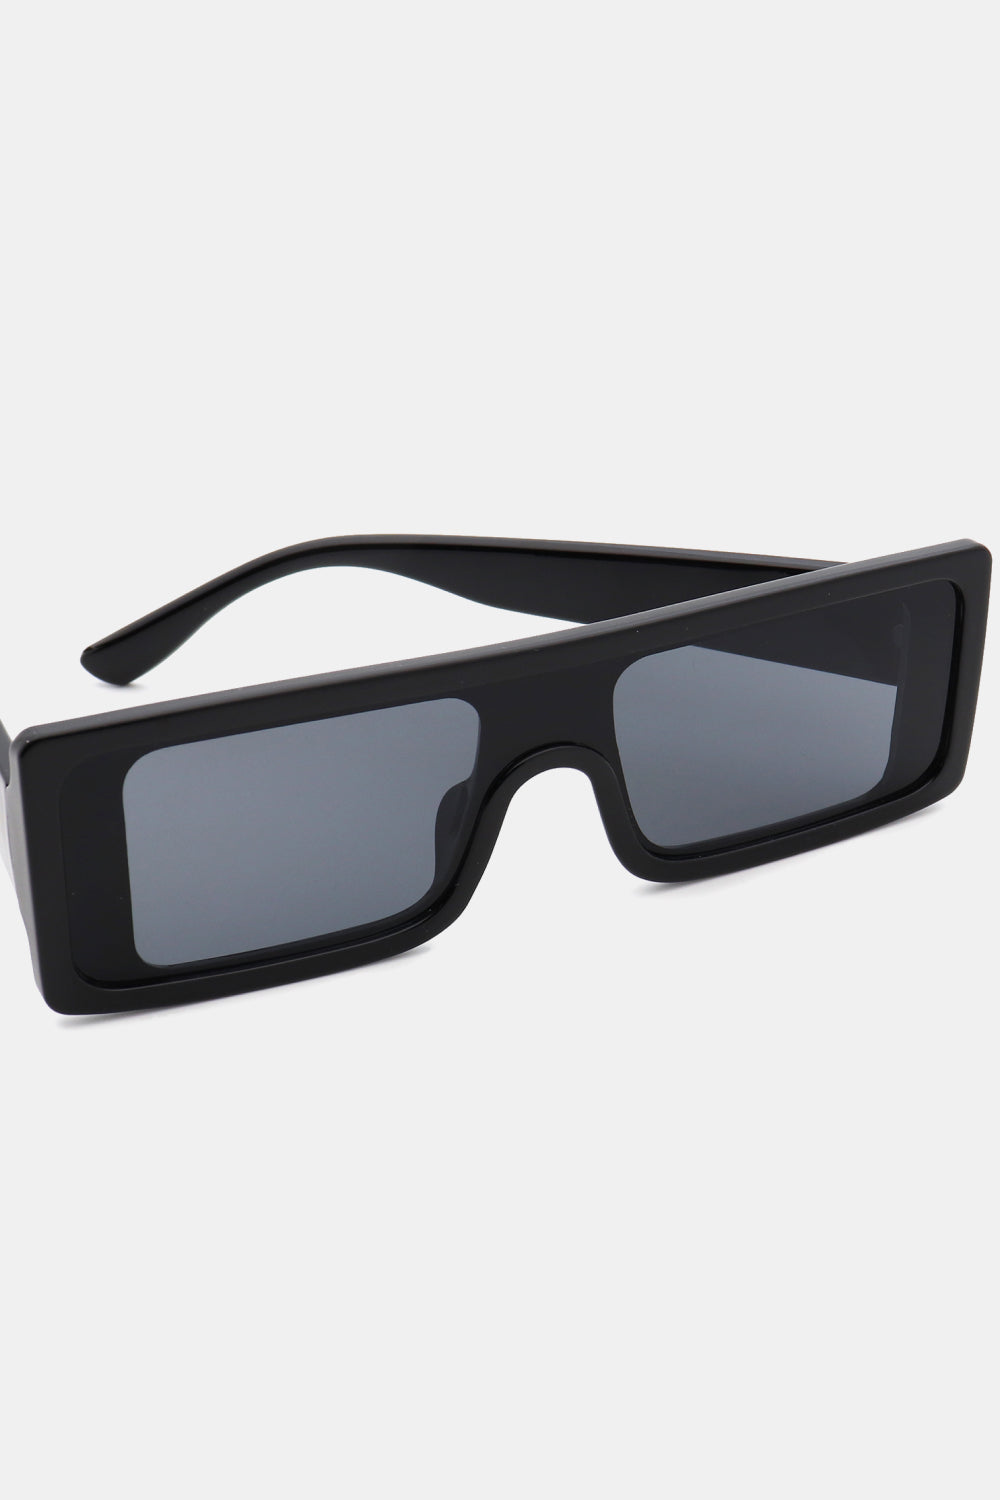 Loyola Sunglasses